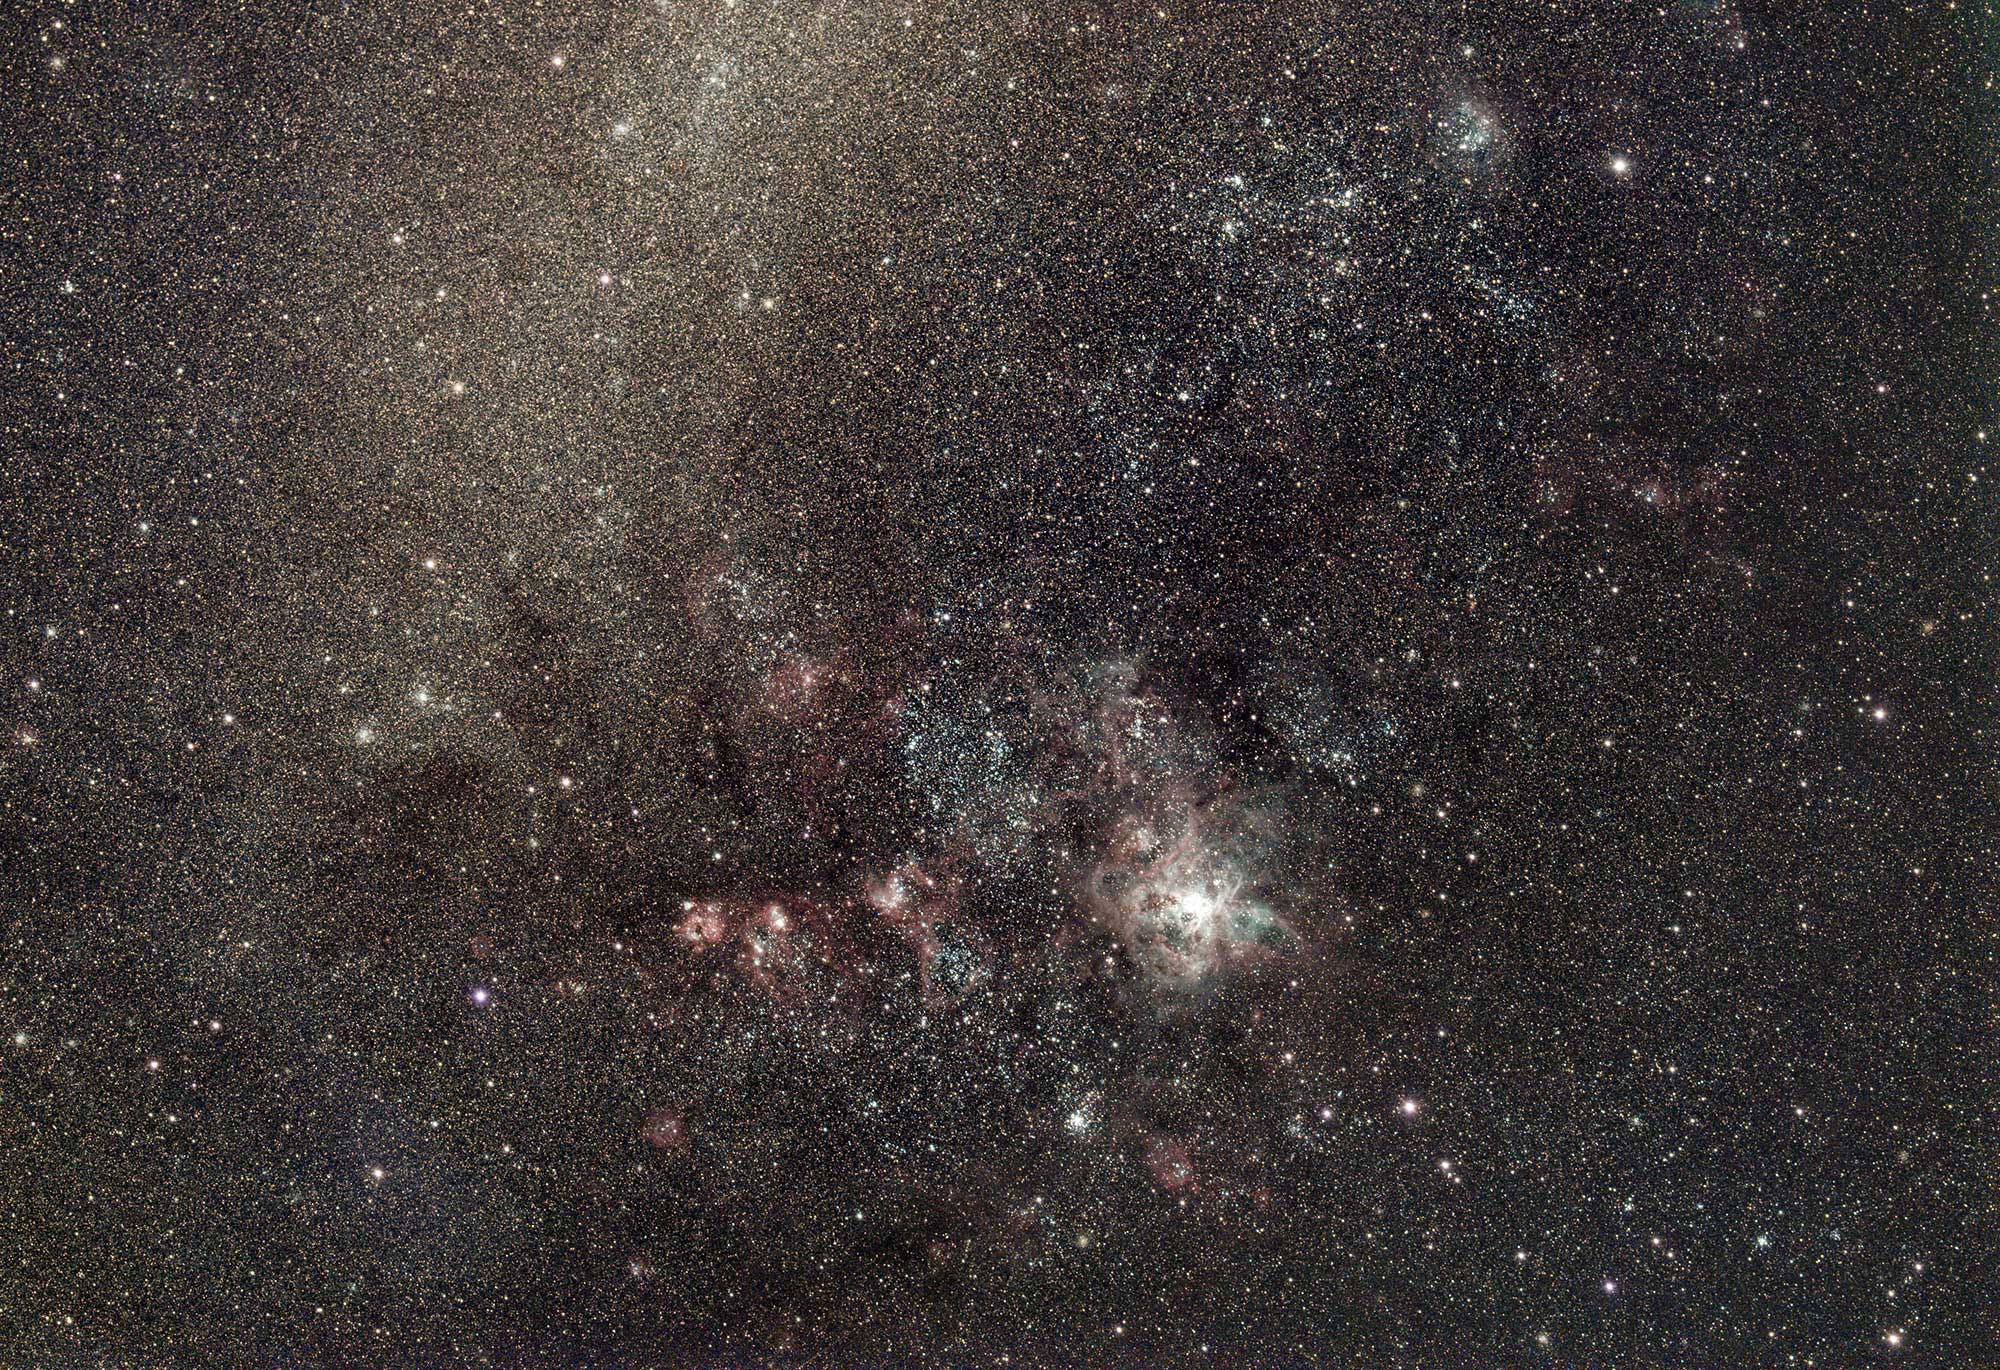 The Tarantula nebula